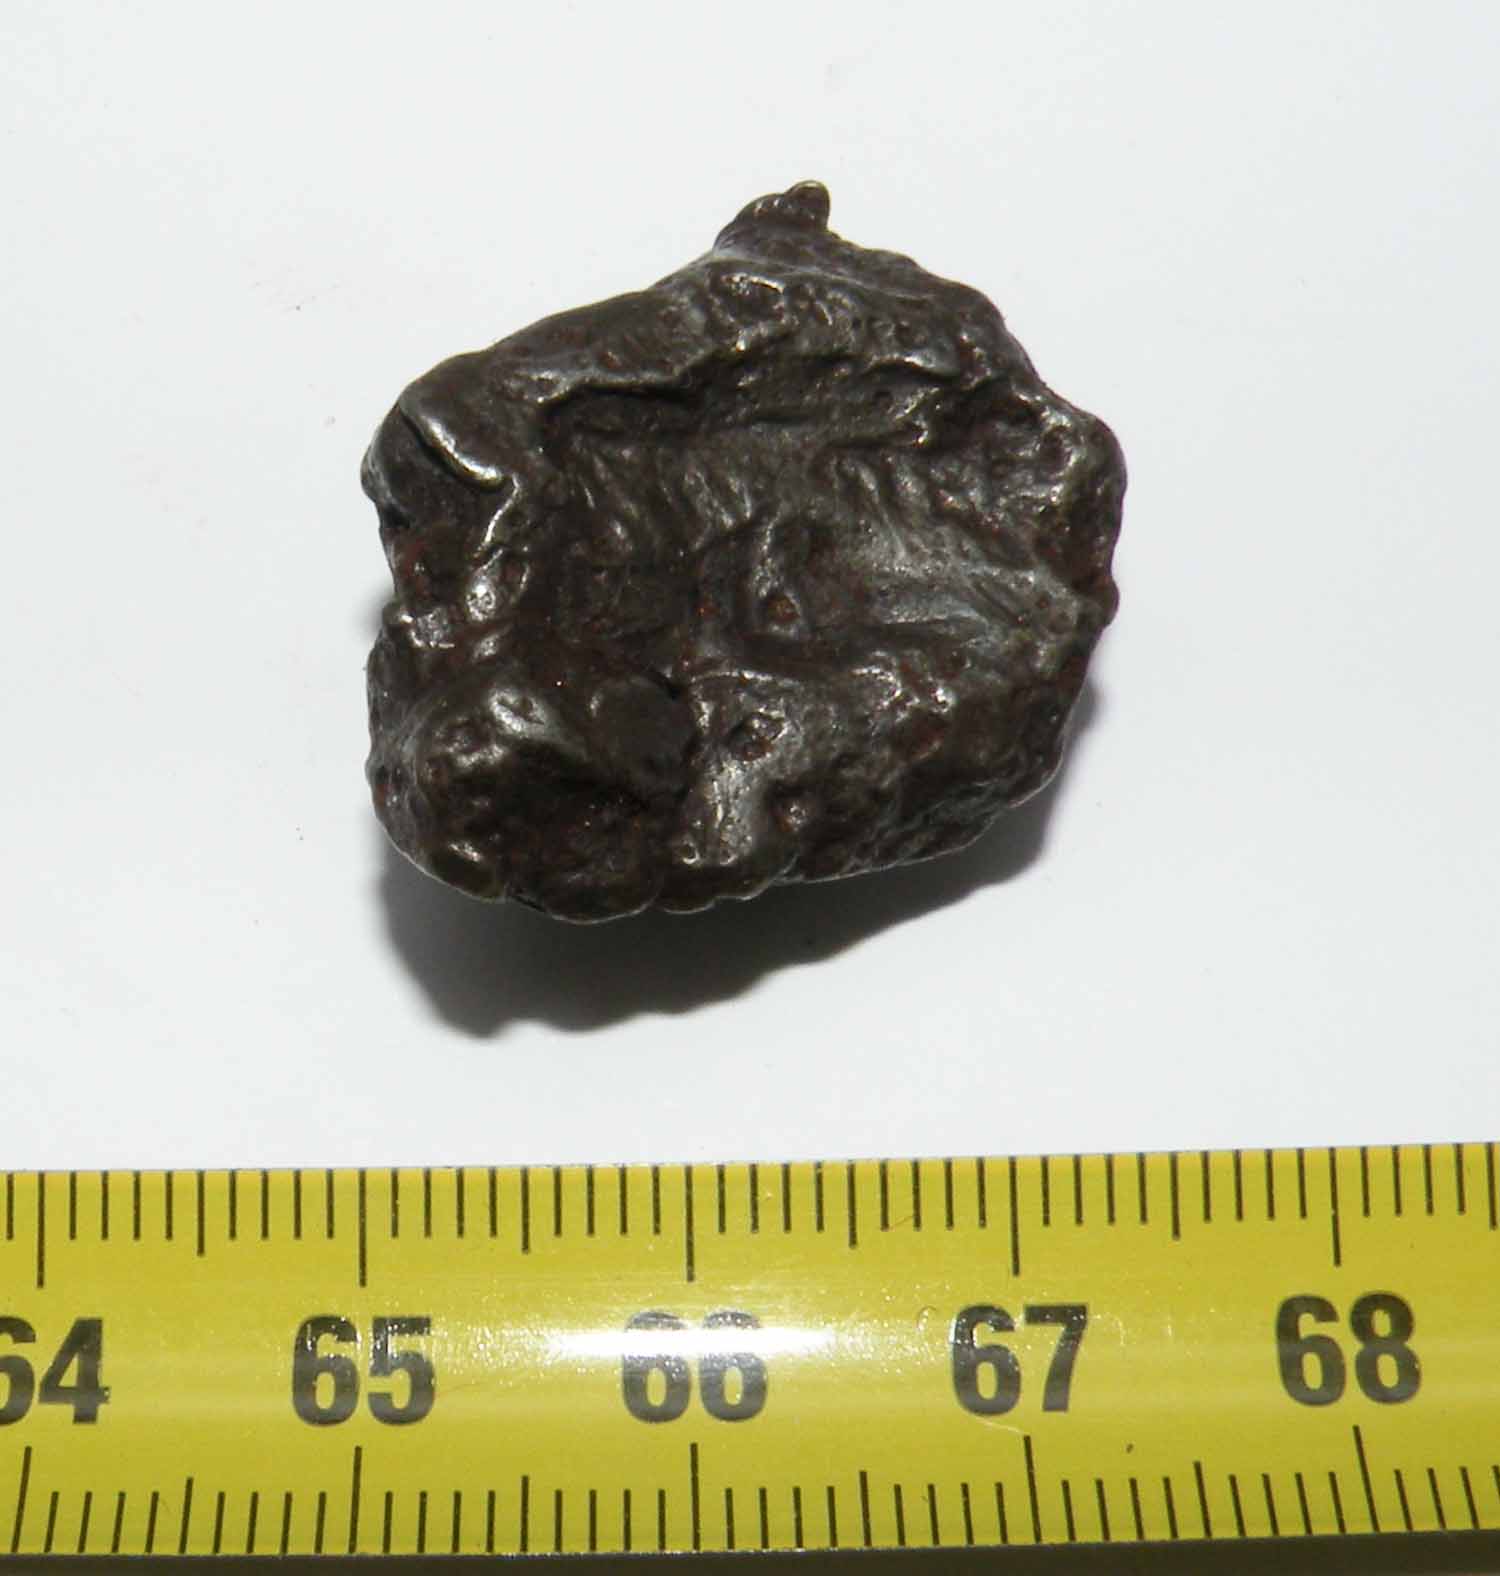 https://www.nuggetsfactory.com/EURO/meteorite/sikhote%20alin/83%20sikhote%20alin%20a.jpg